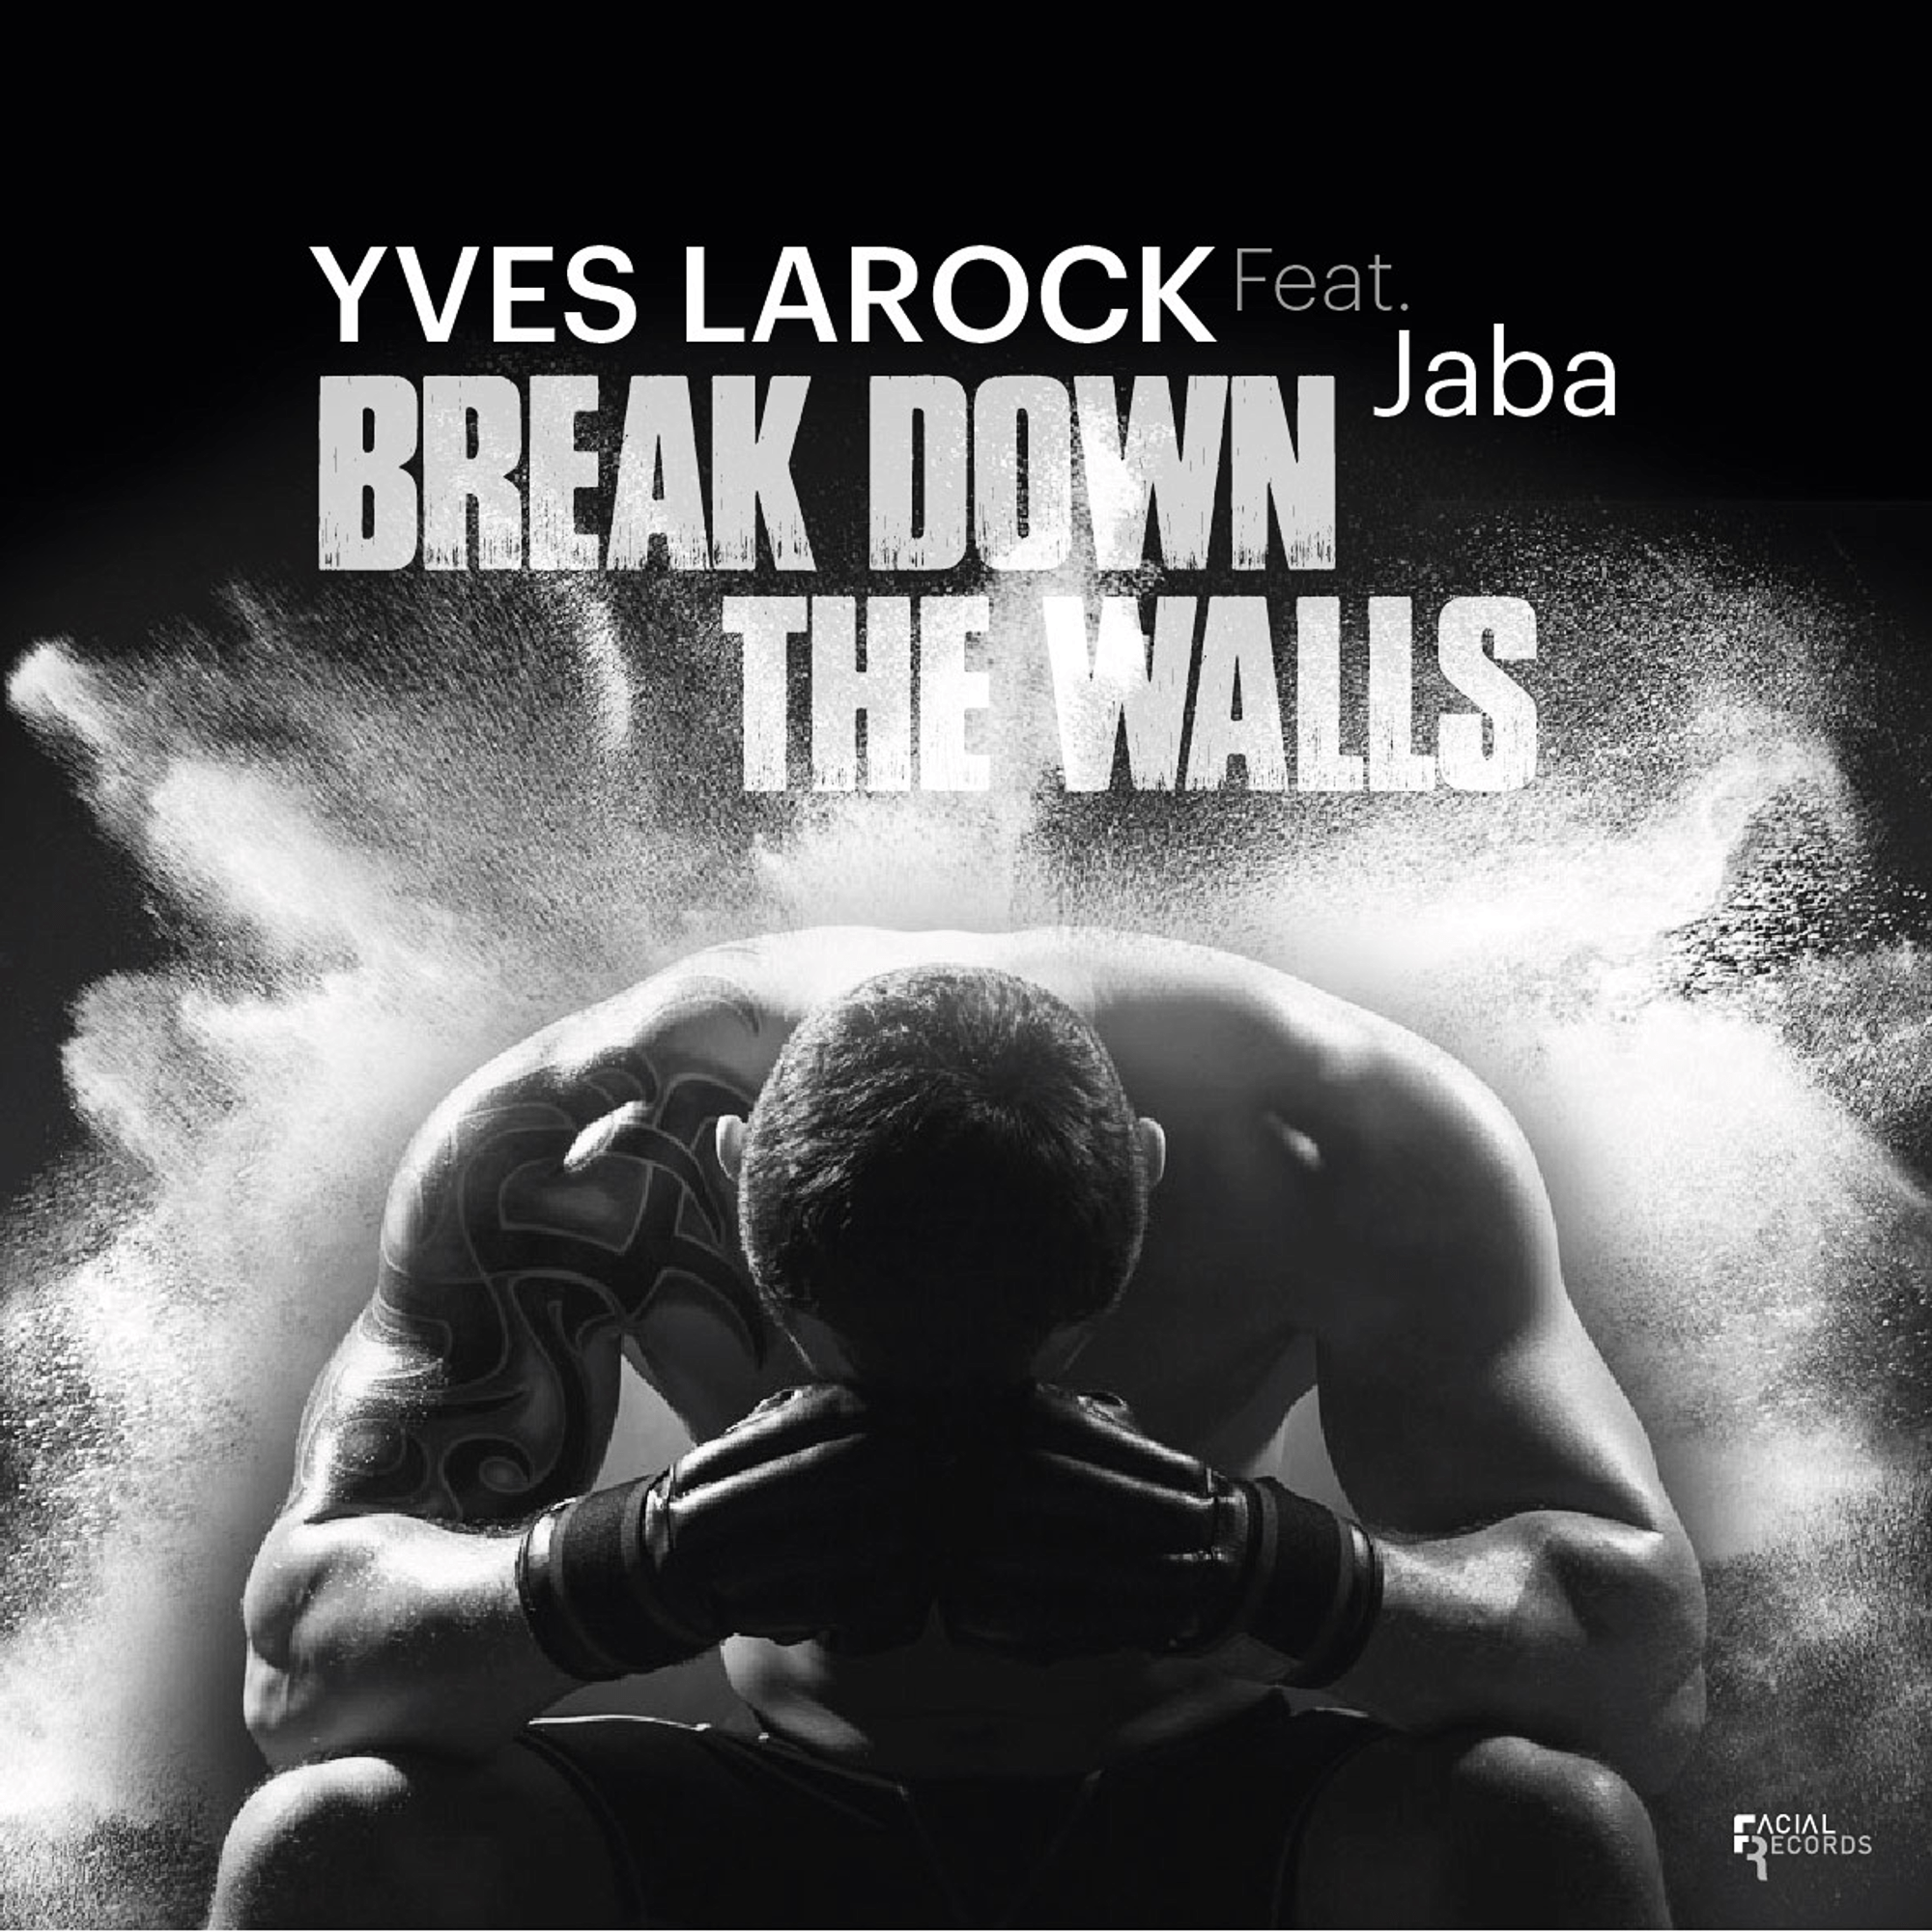 yves_larock_feat._jaba_-_break_down_the_walls_facial_recordsartwork.png